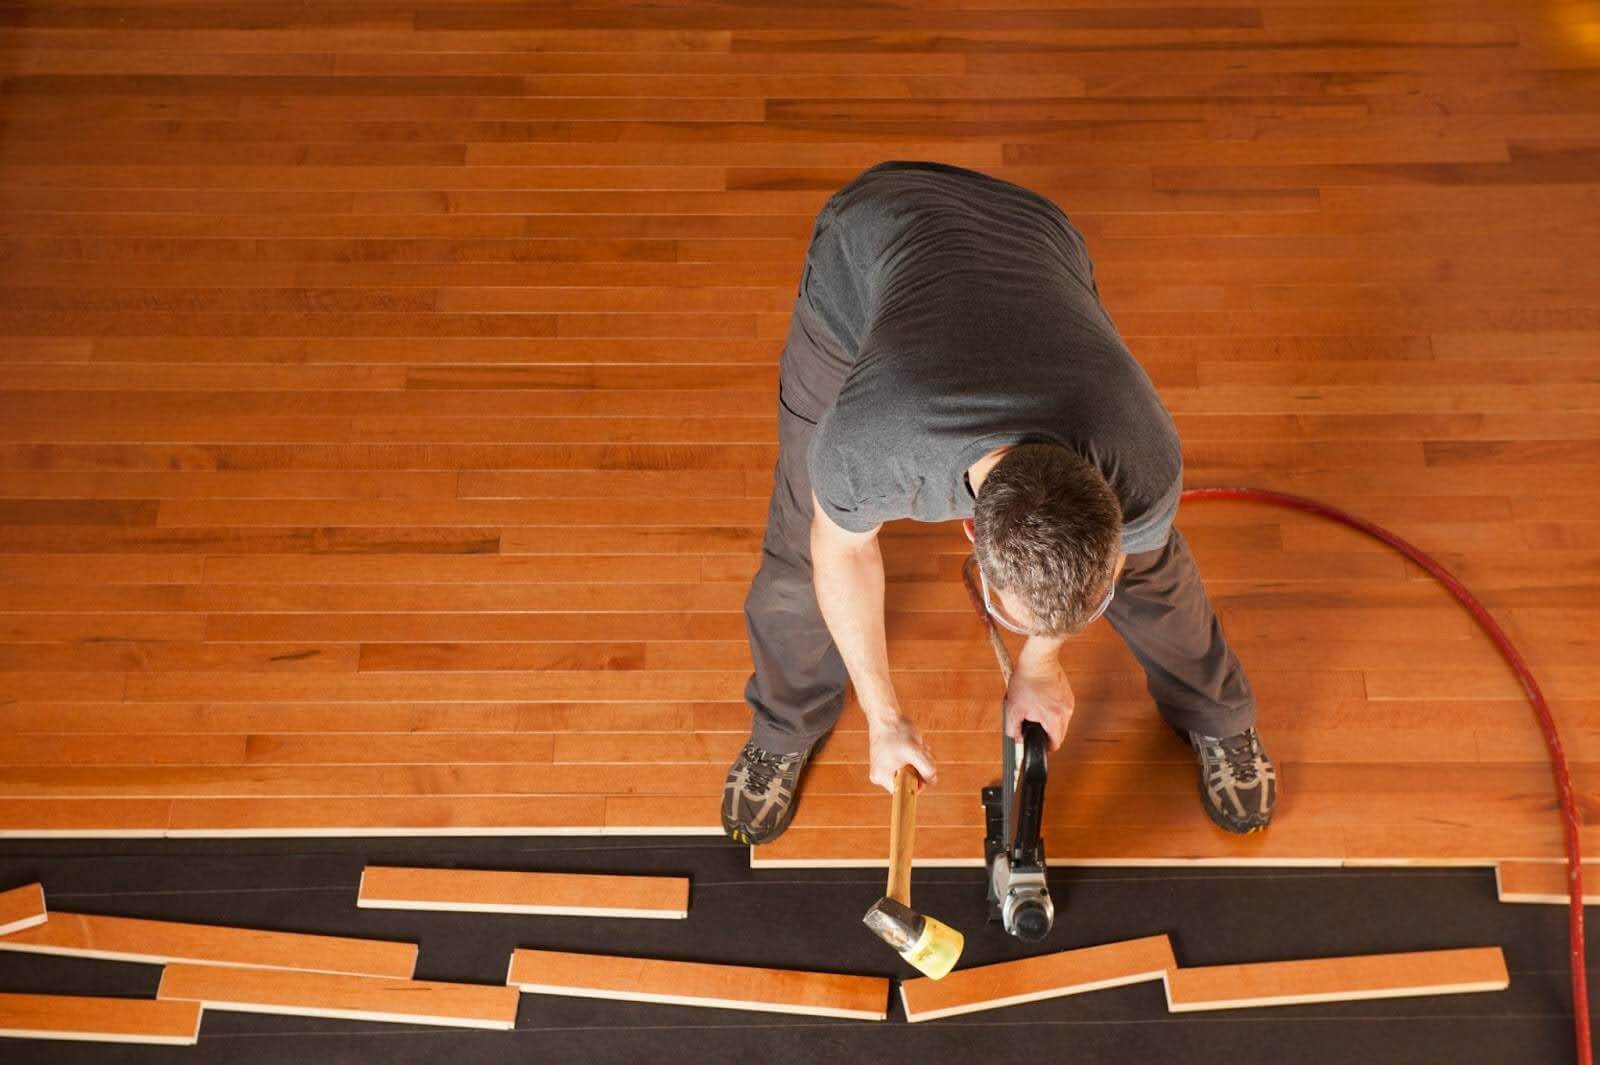 Man installing a new hardwood floor.